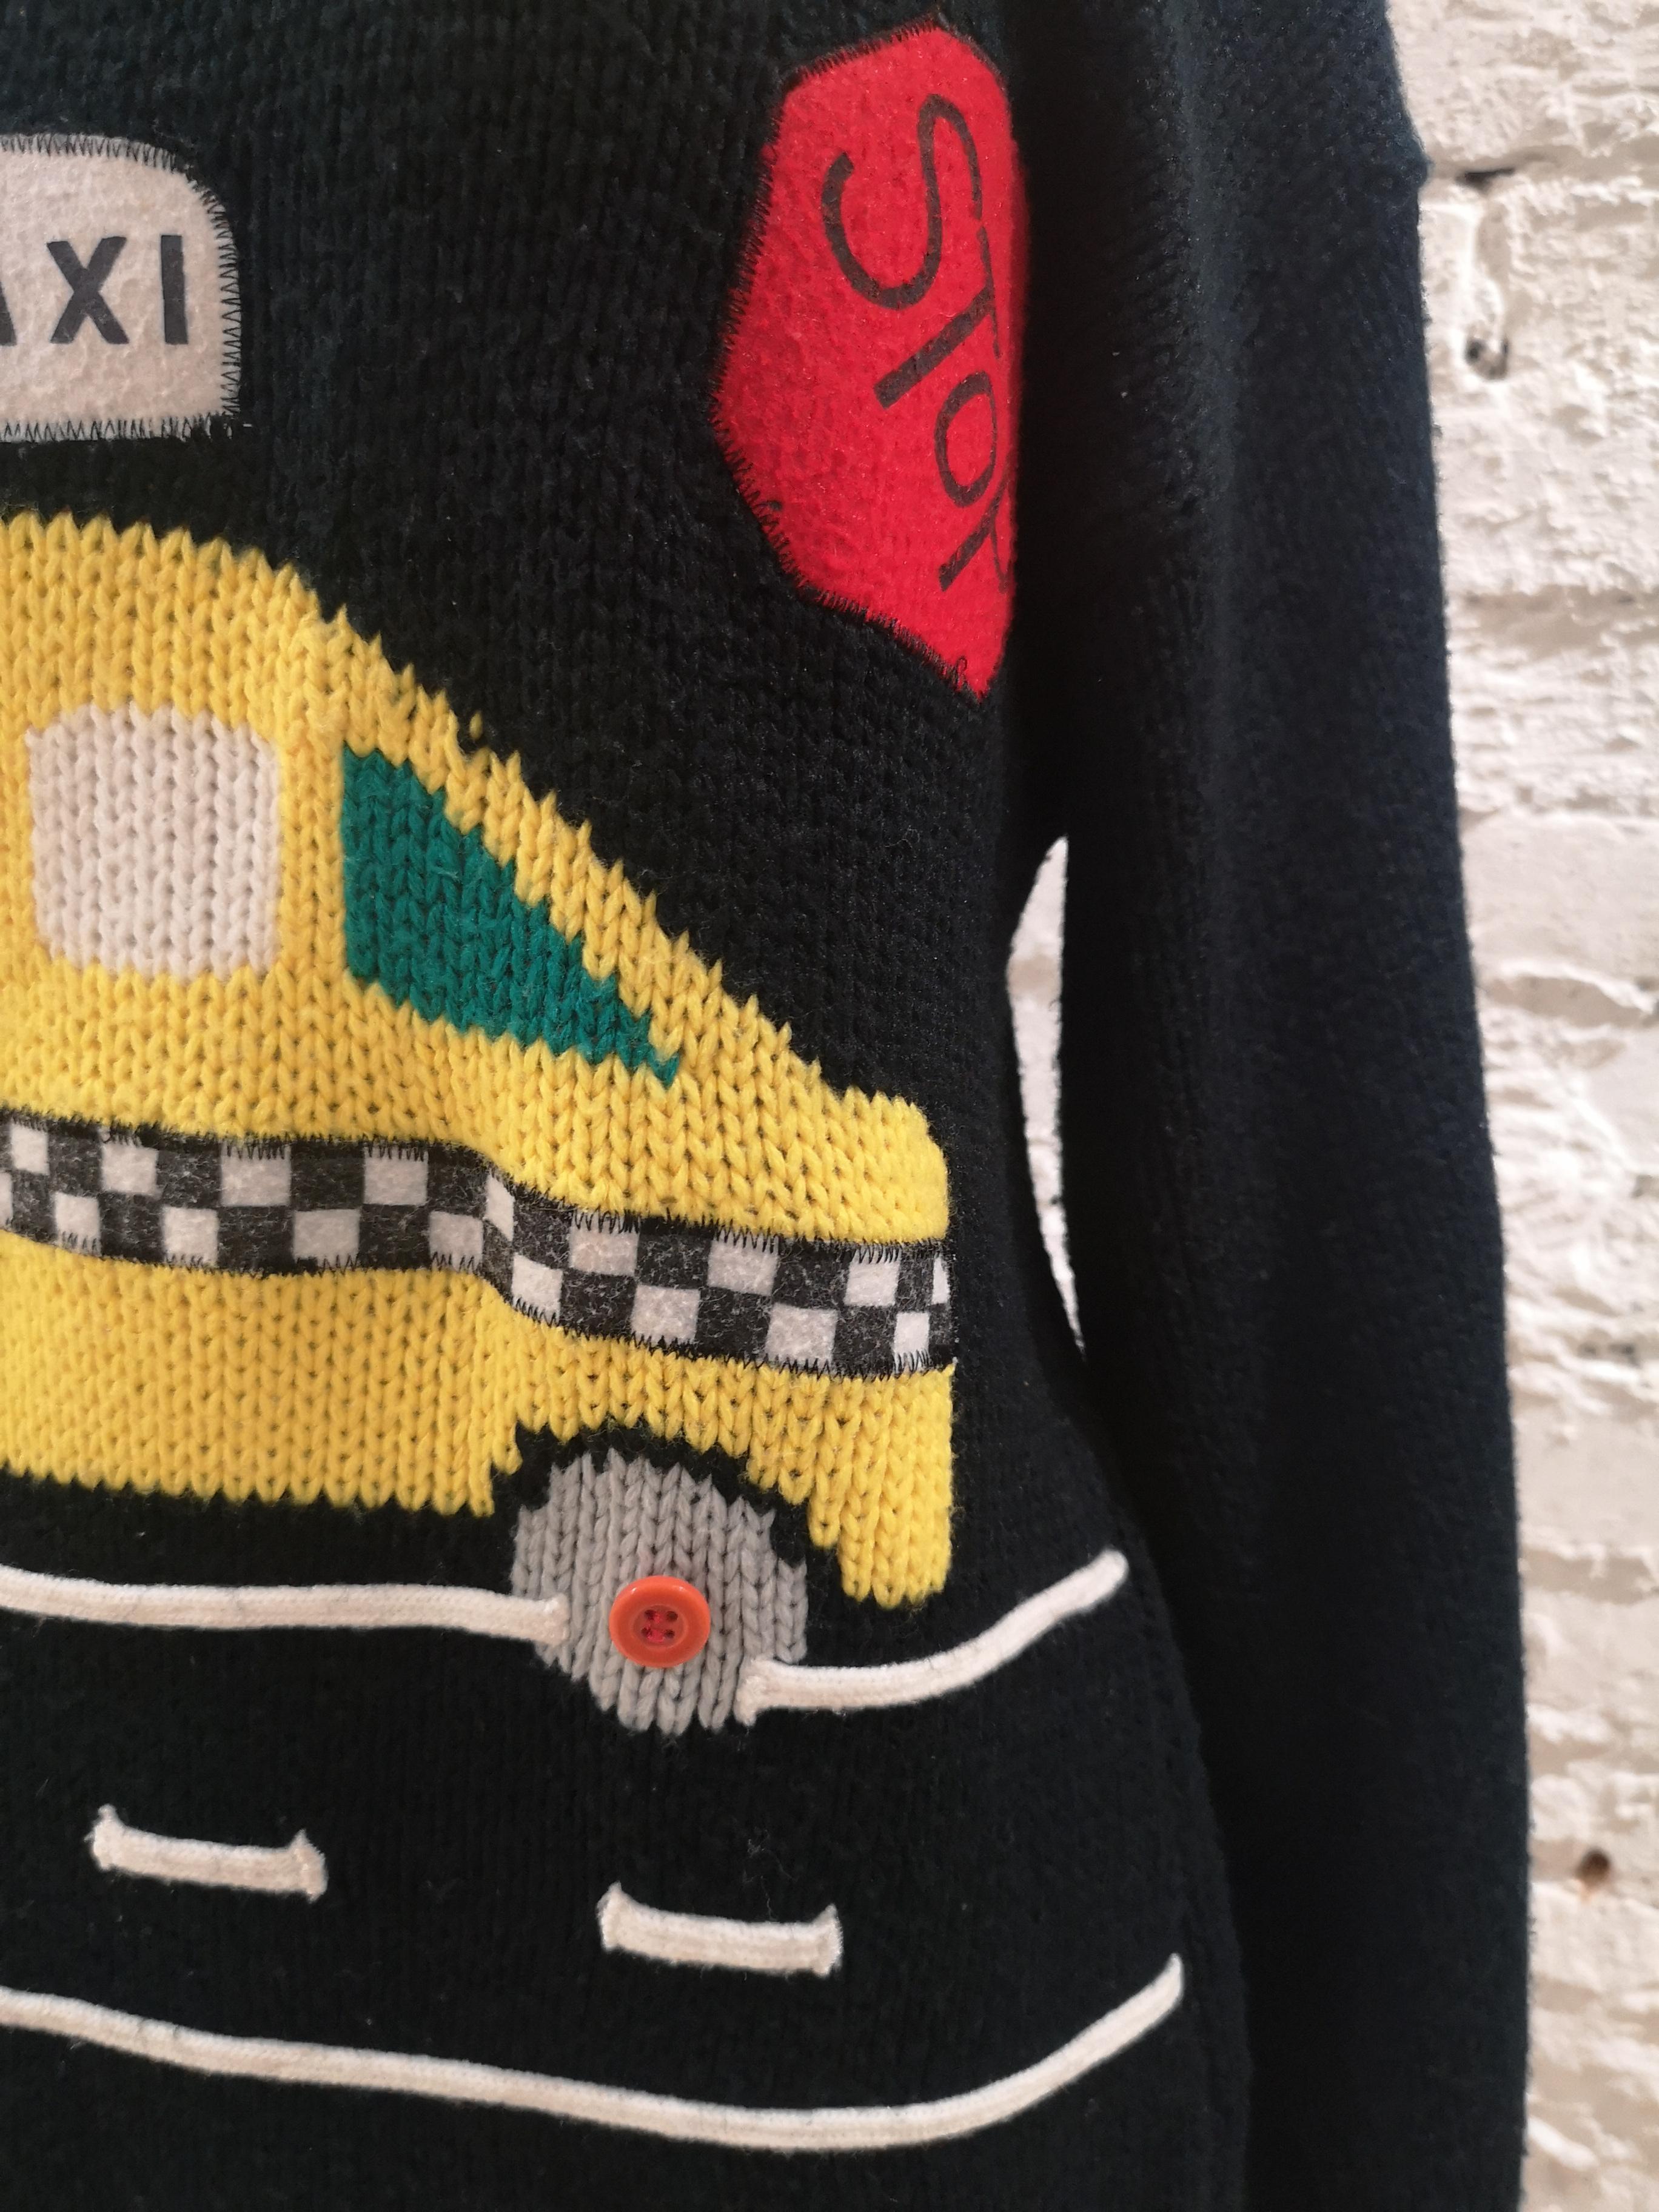 Women's or Men's Black wool taxi sweater / pull